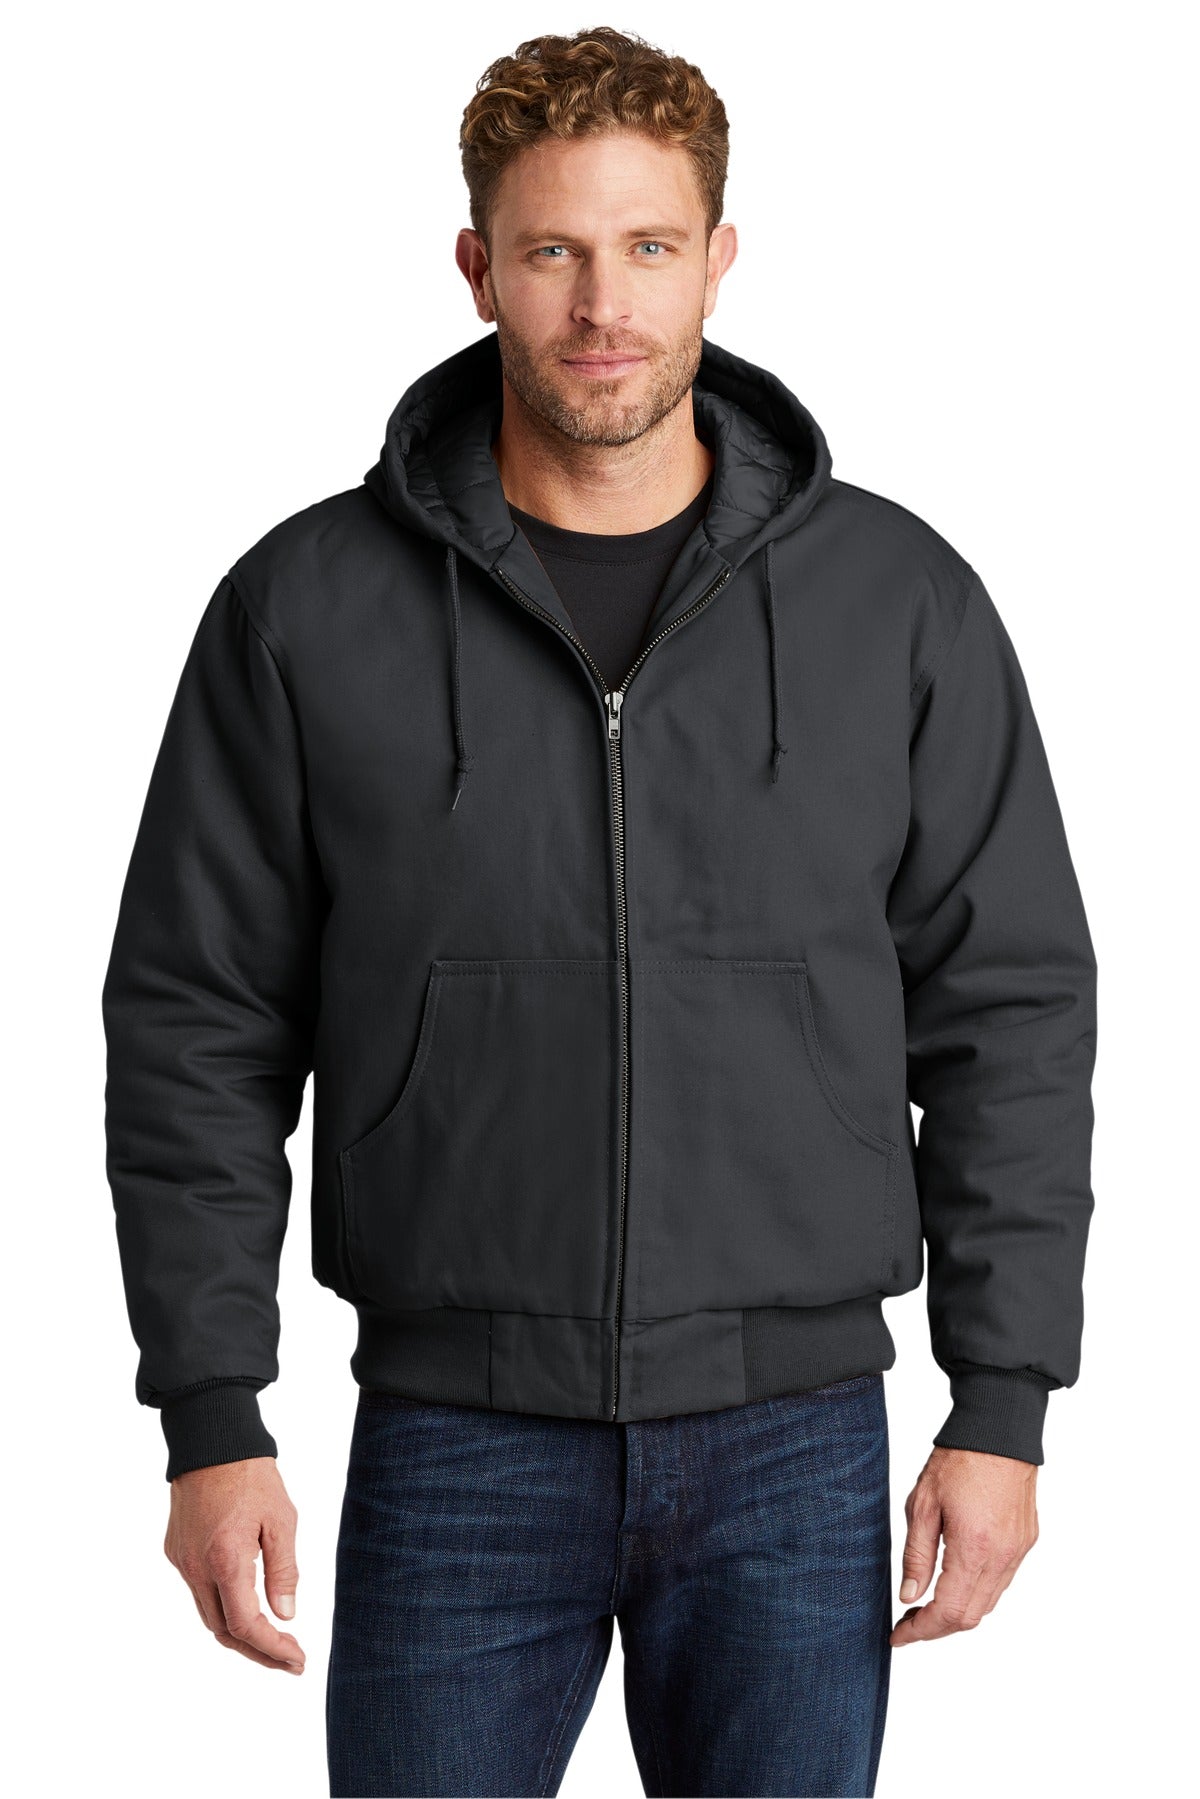 CornerStone® - Duck Cloth Hooded Work Jacket.  J763H